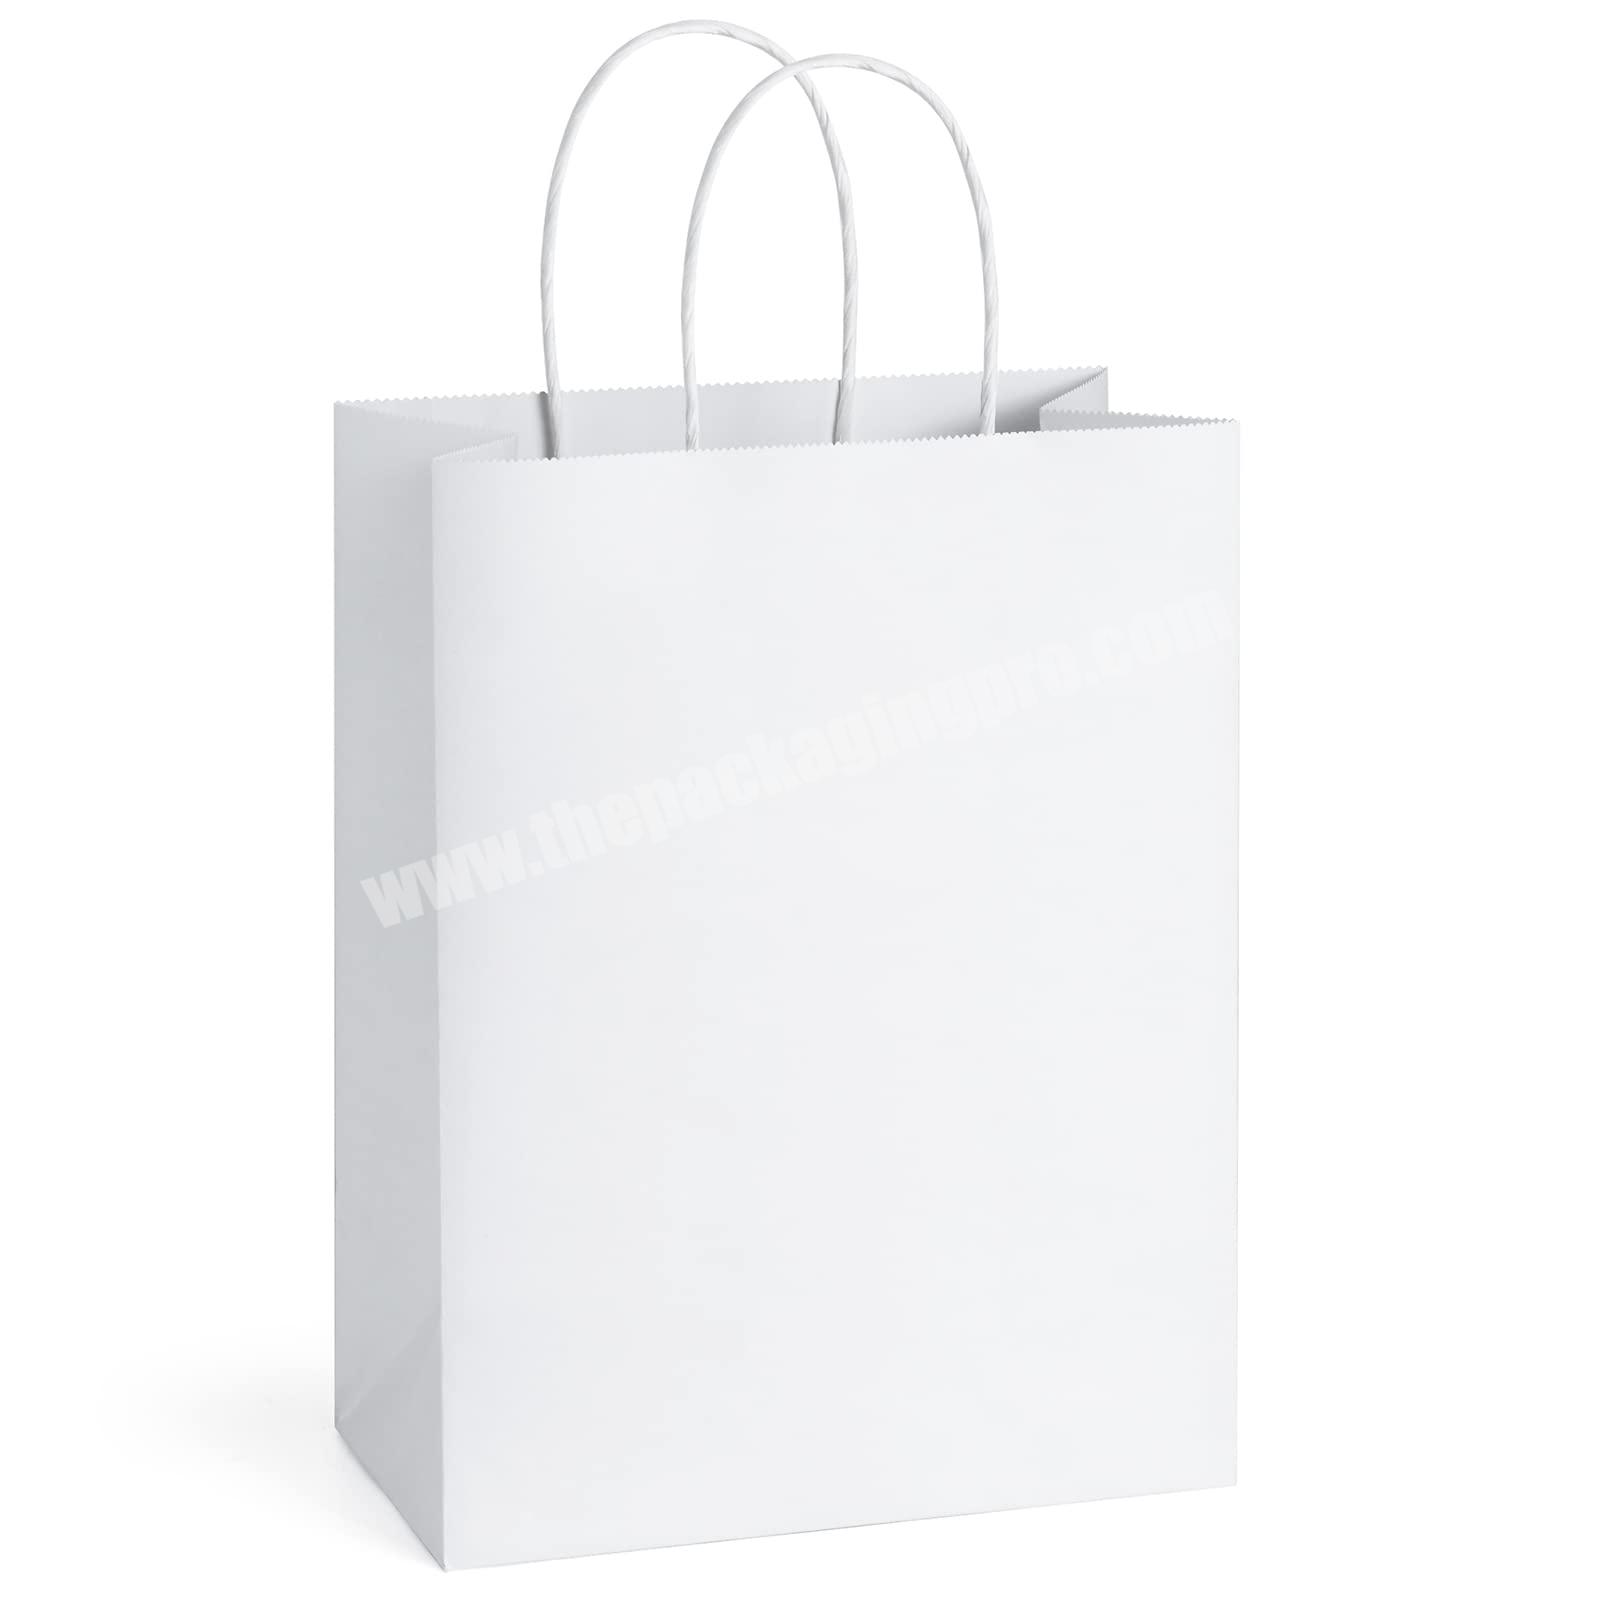 Biodegradable bolsa de papel black white kraft takeaway carry out shopping paper gift bag for groceries restaurant